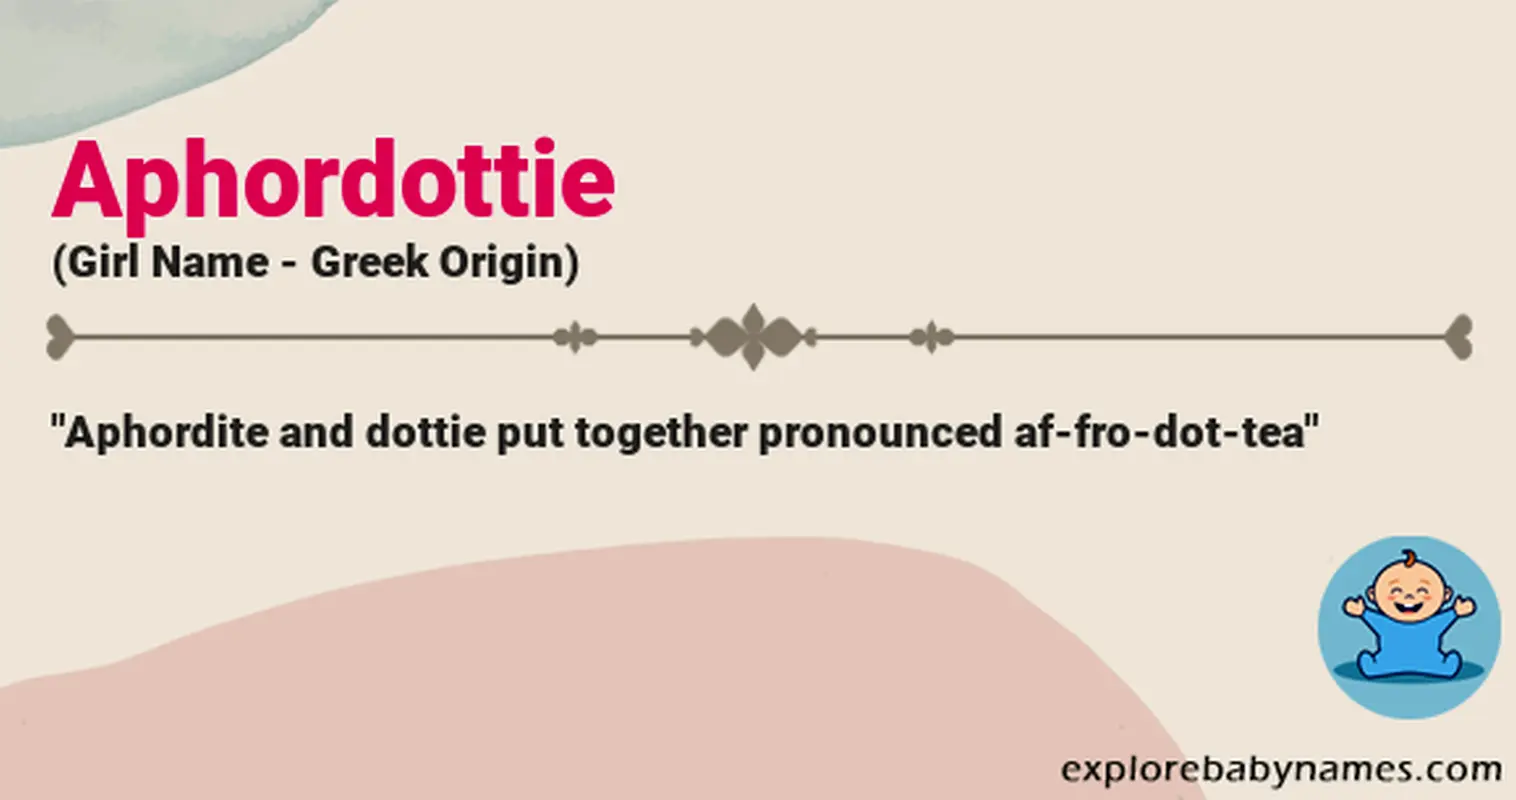 Meaning of Aphordottie